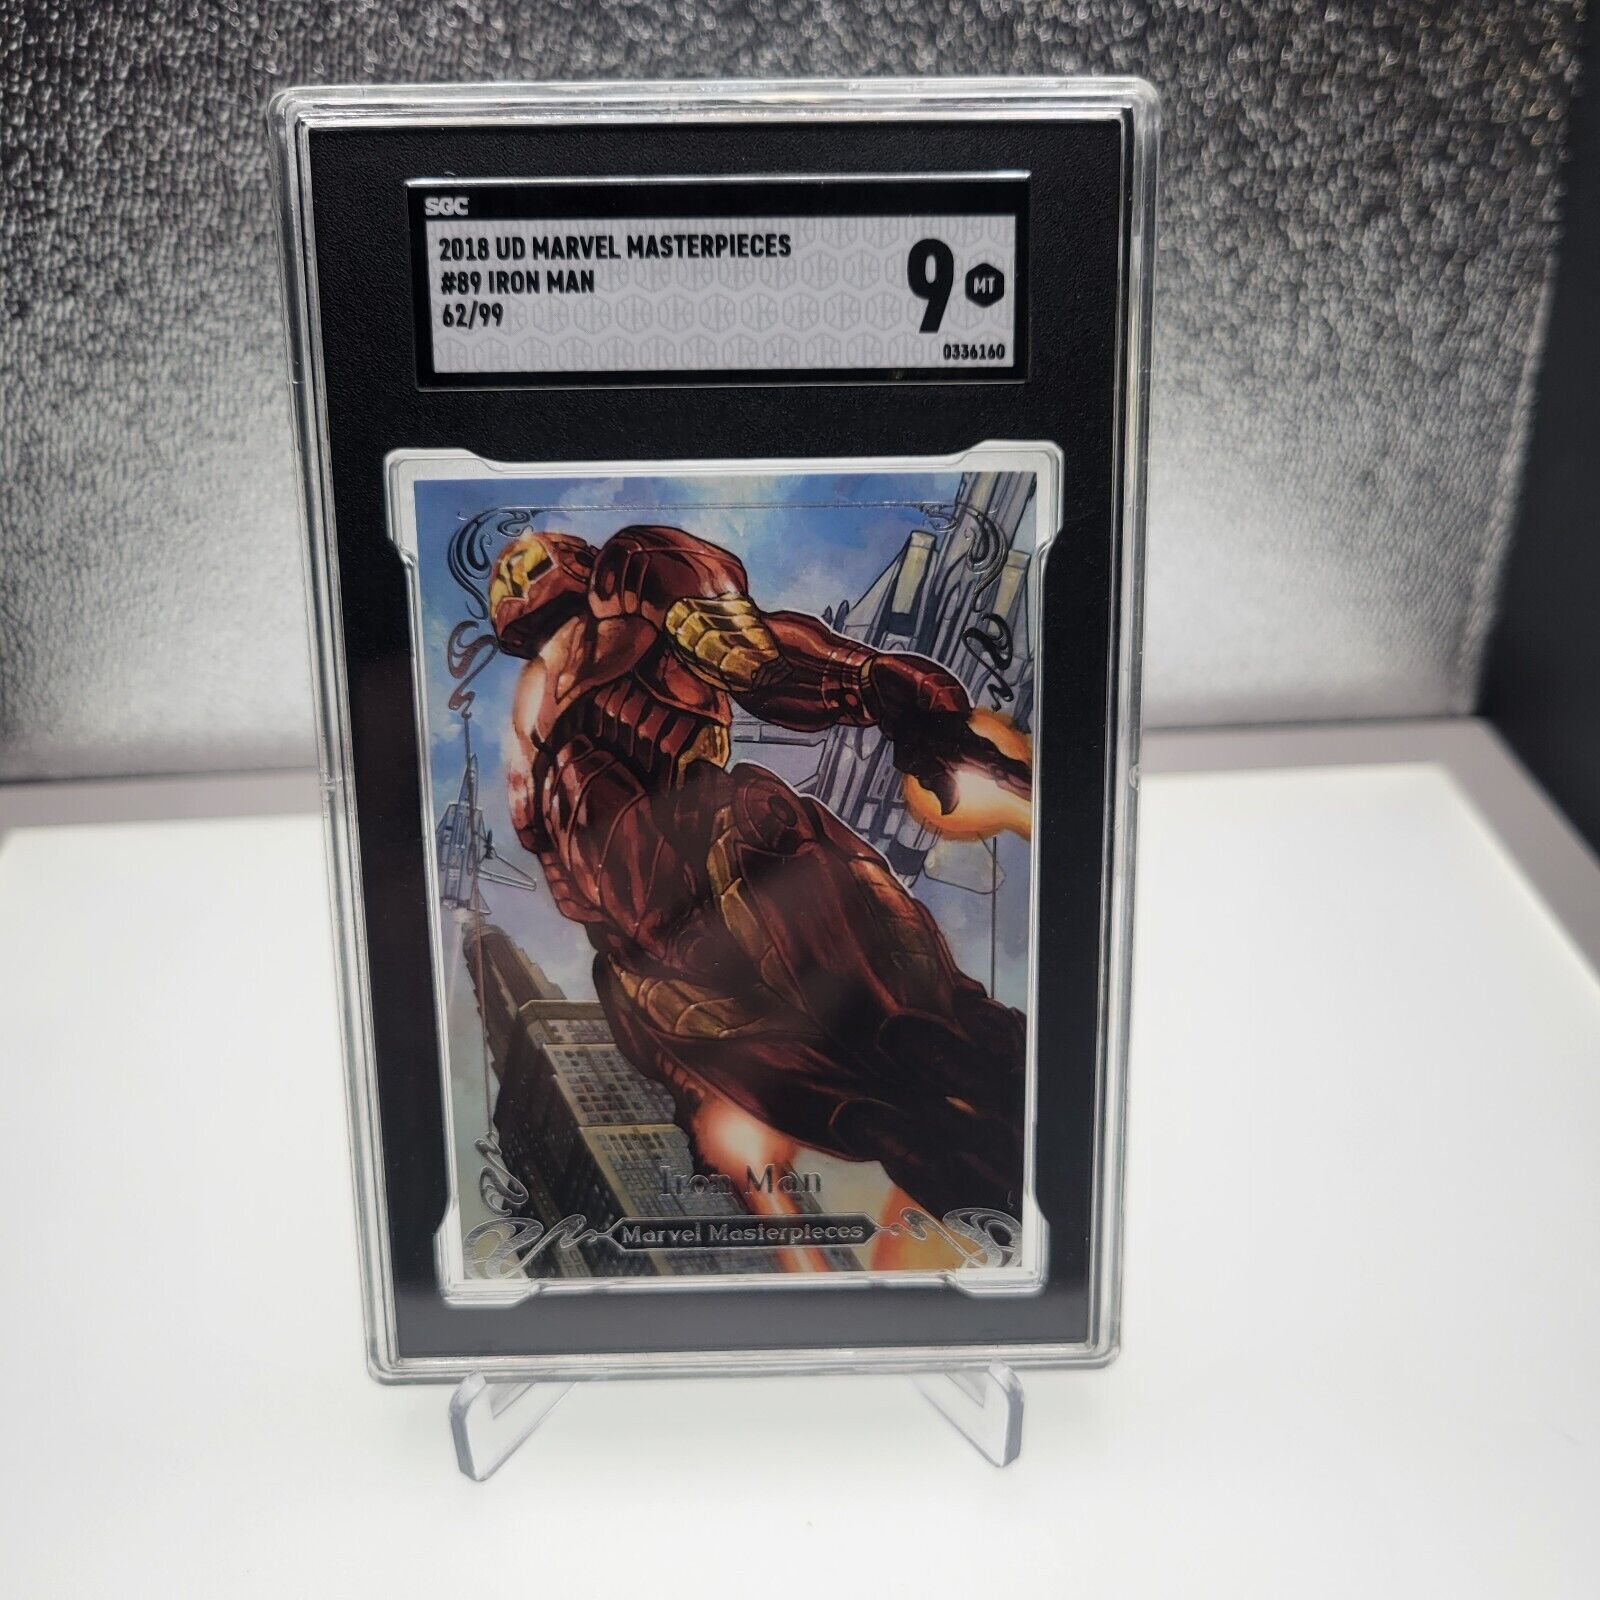 2018 UD Marvel Masterpieces Iron Man #89 Card SGC 9 62/99 Rare